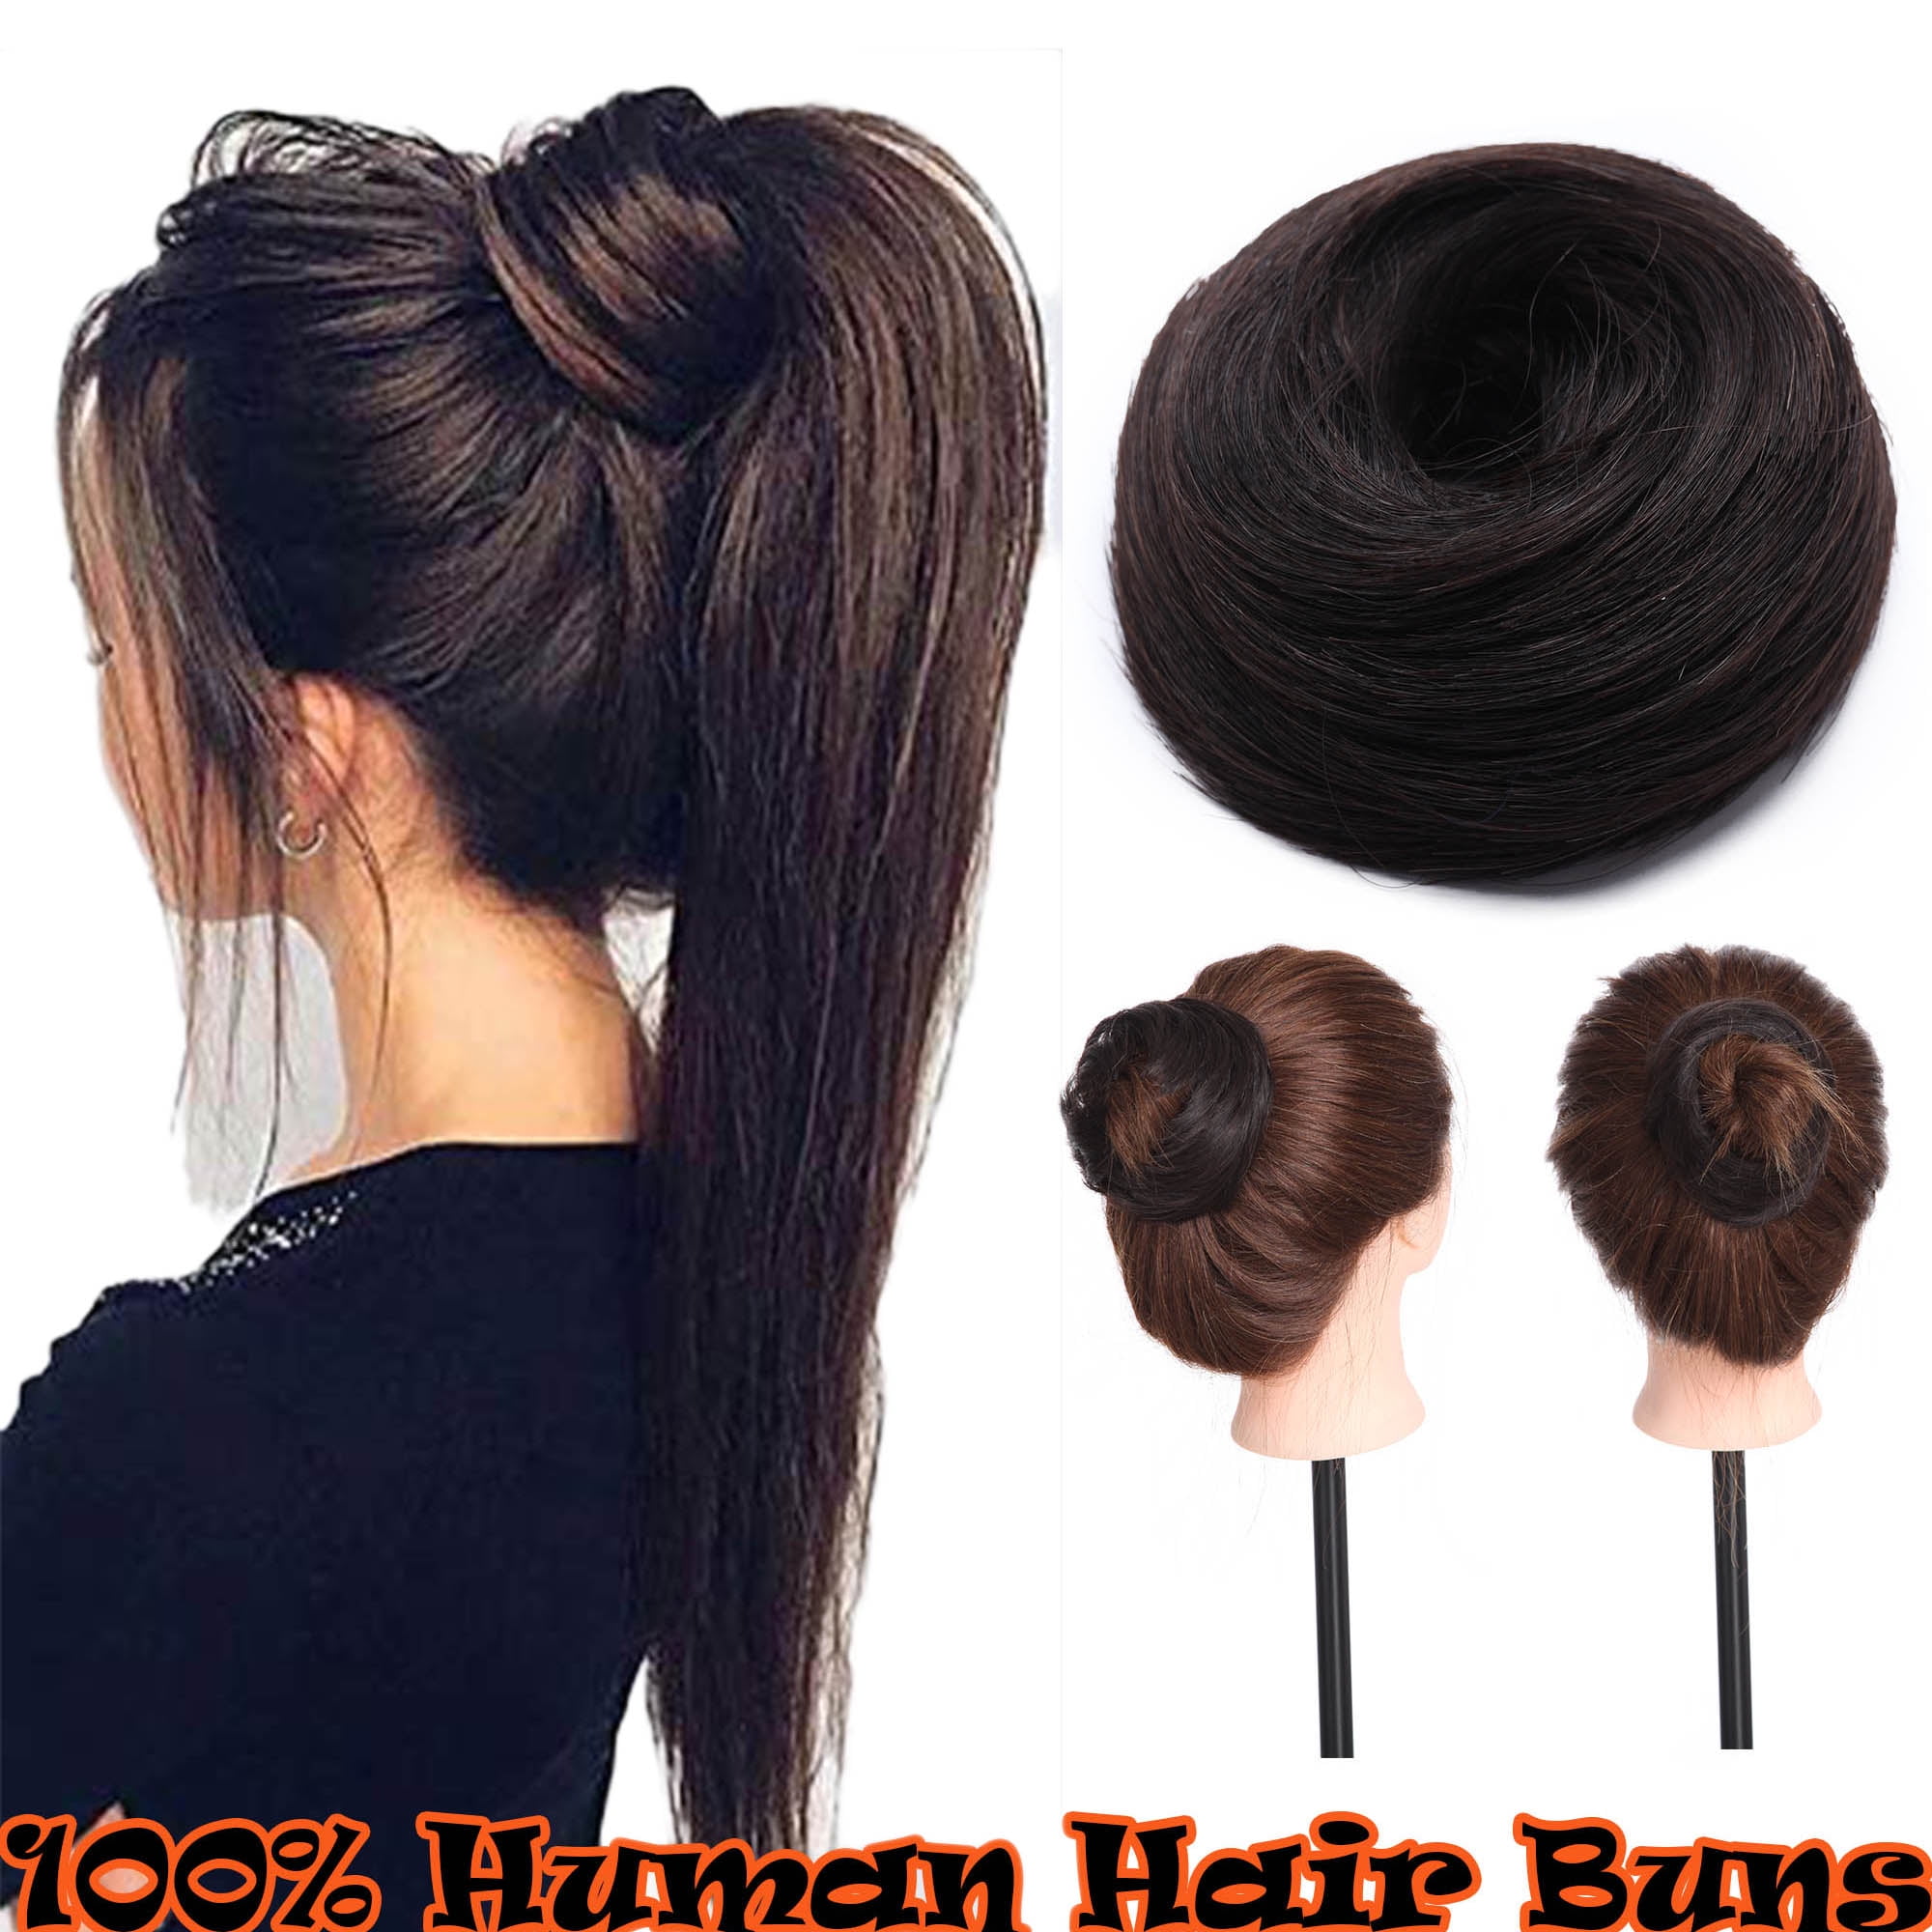 HAIR SCRUNCHIES SYNTHETIC HAIR SCRUNCHIE BROWN BLONDE BLACK MESSY BUN HAIR PIECE